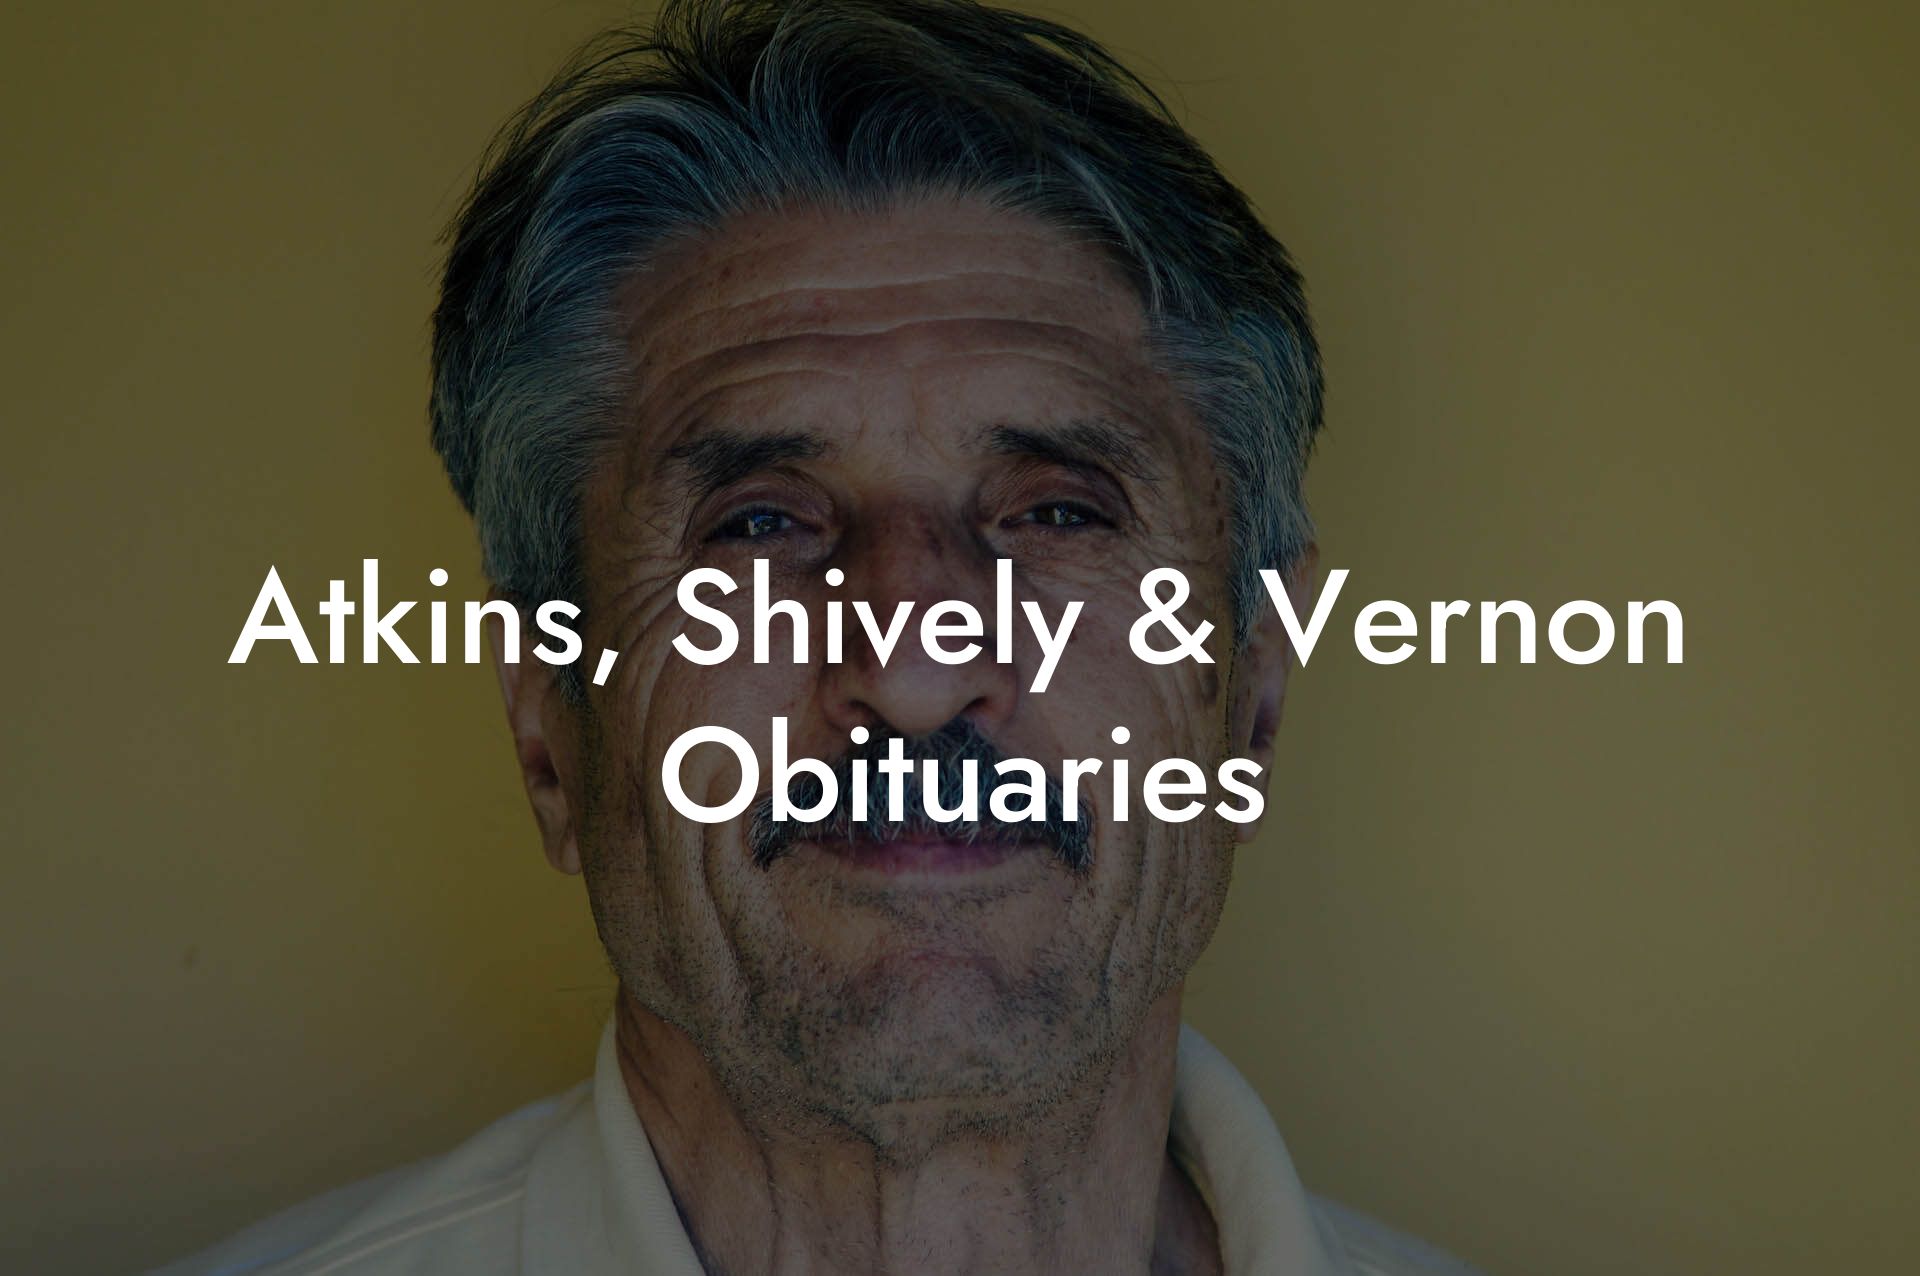 Atkins, Shively & Vernon Obituaries